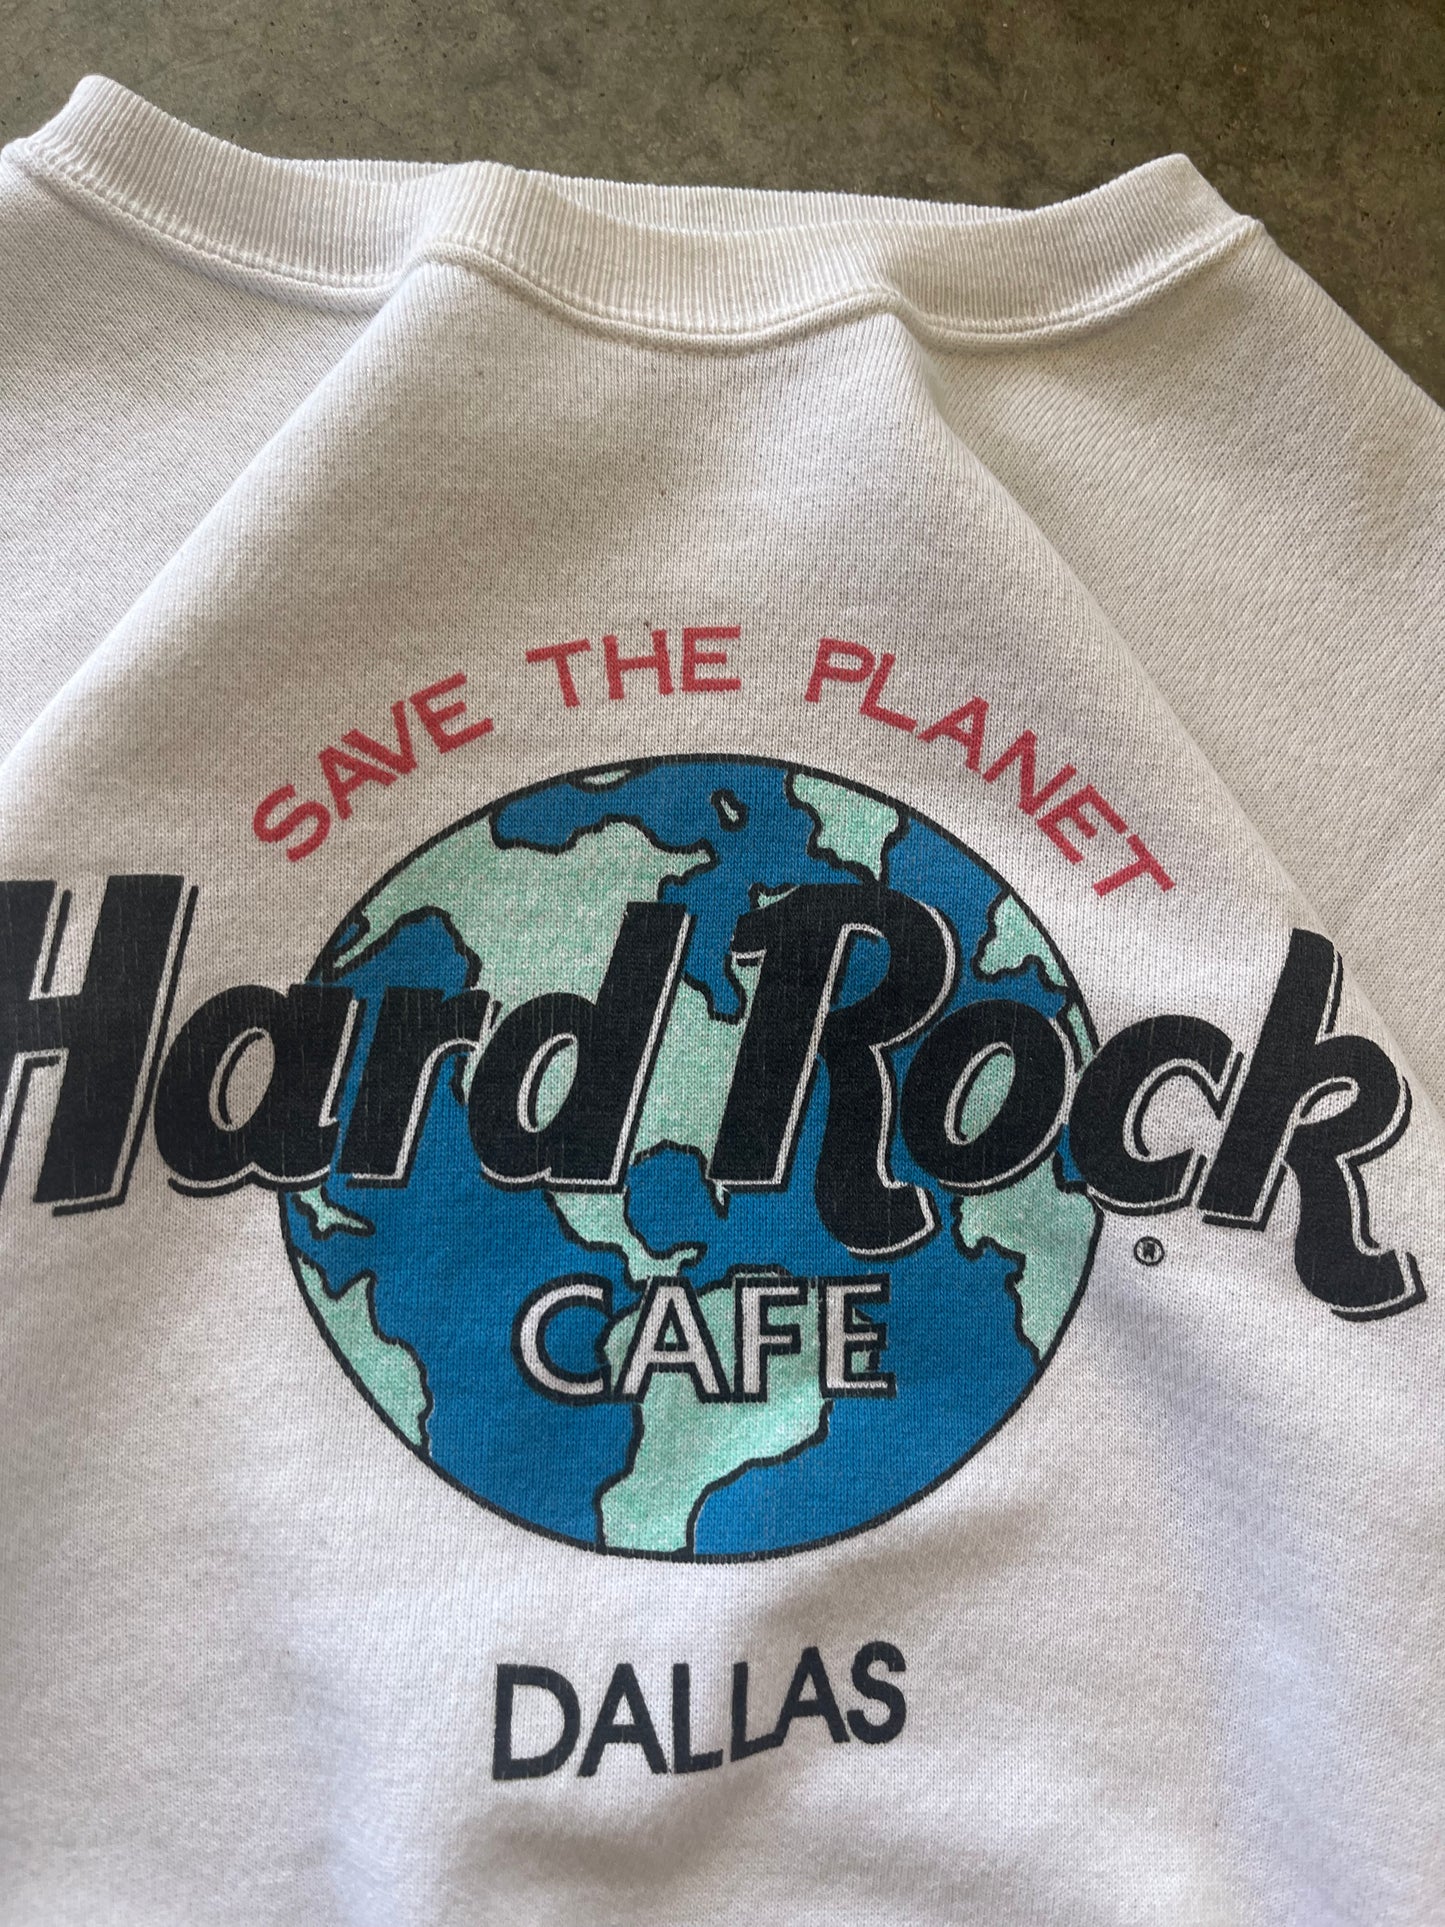 (L) Vintage Hard Rock Sweatshirt